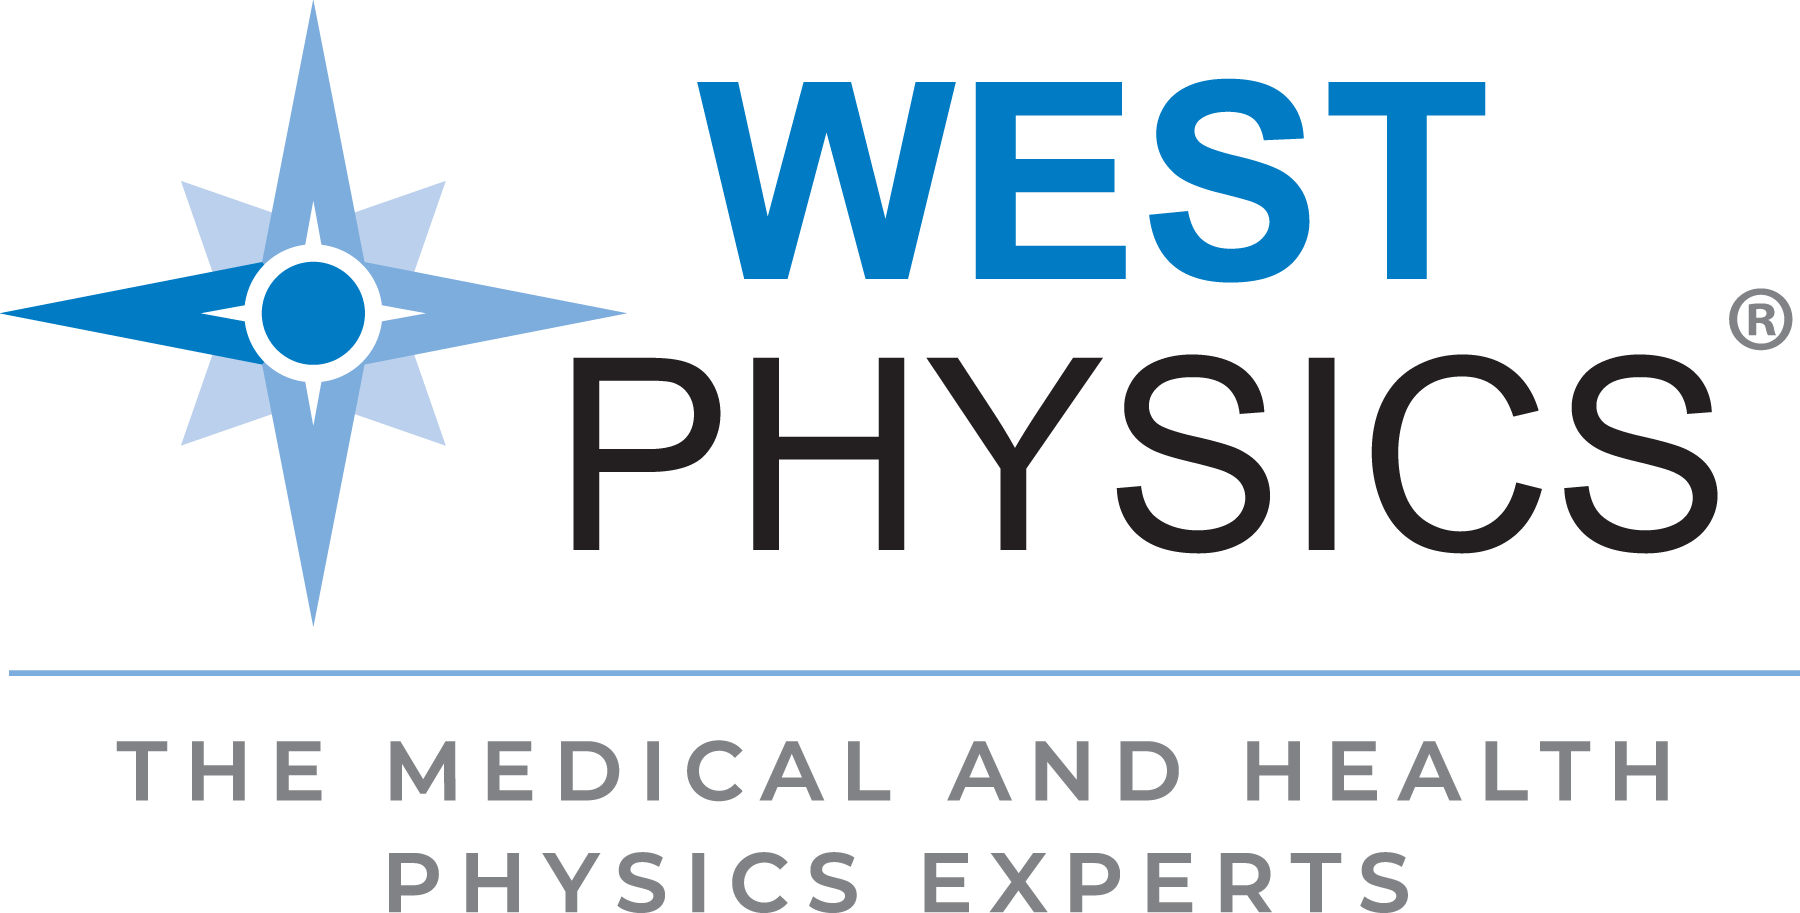 West Physics